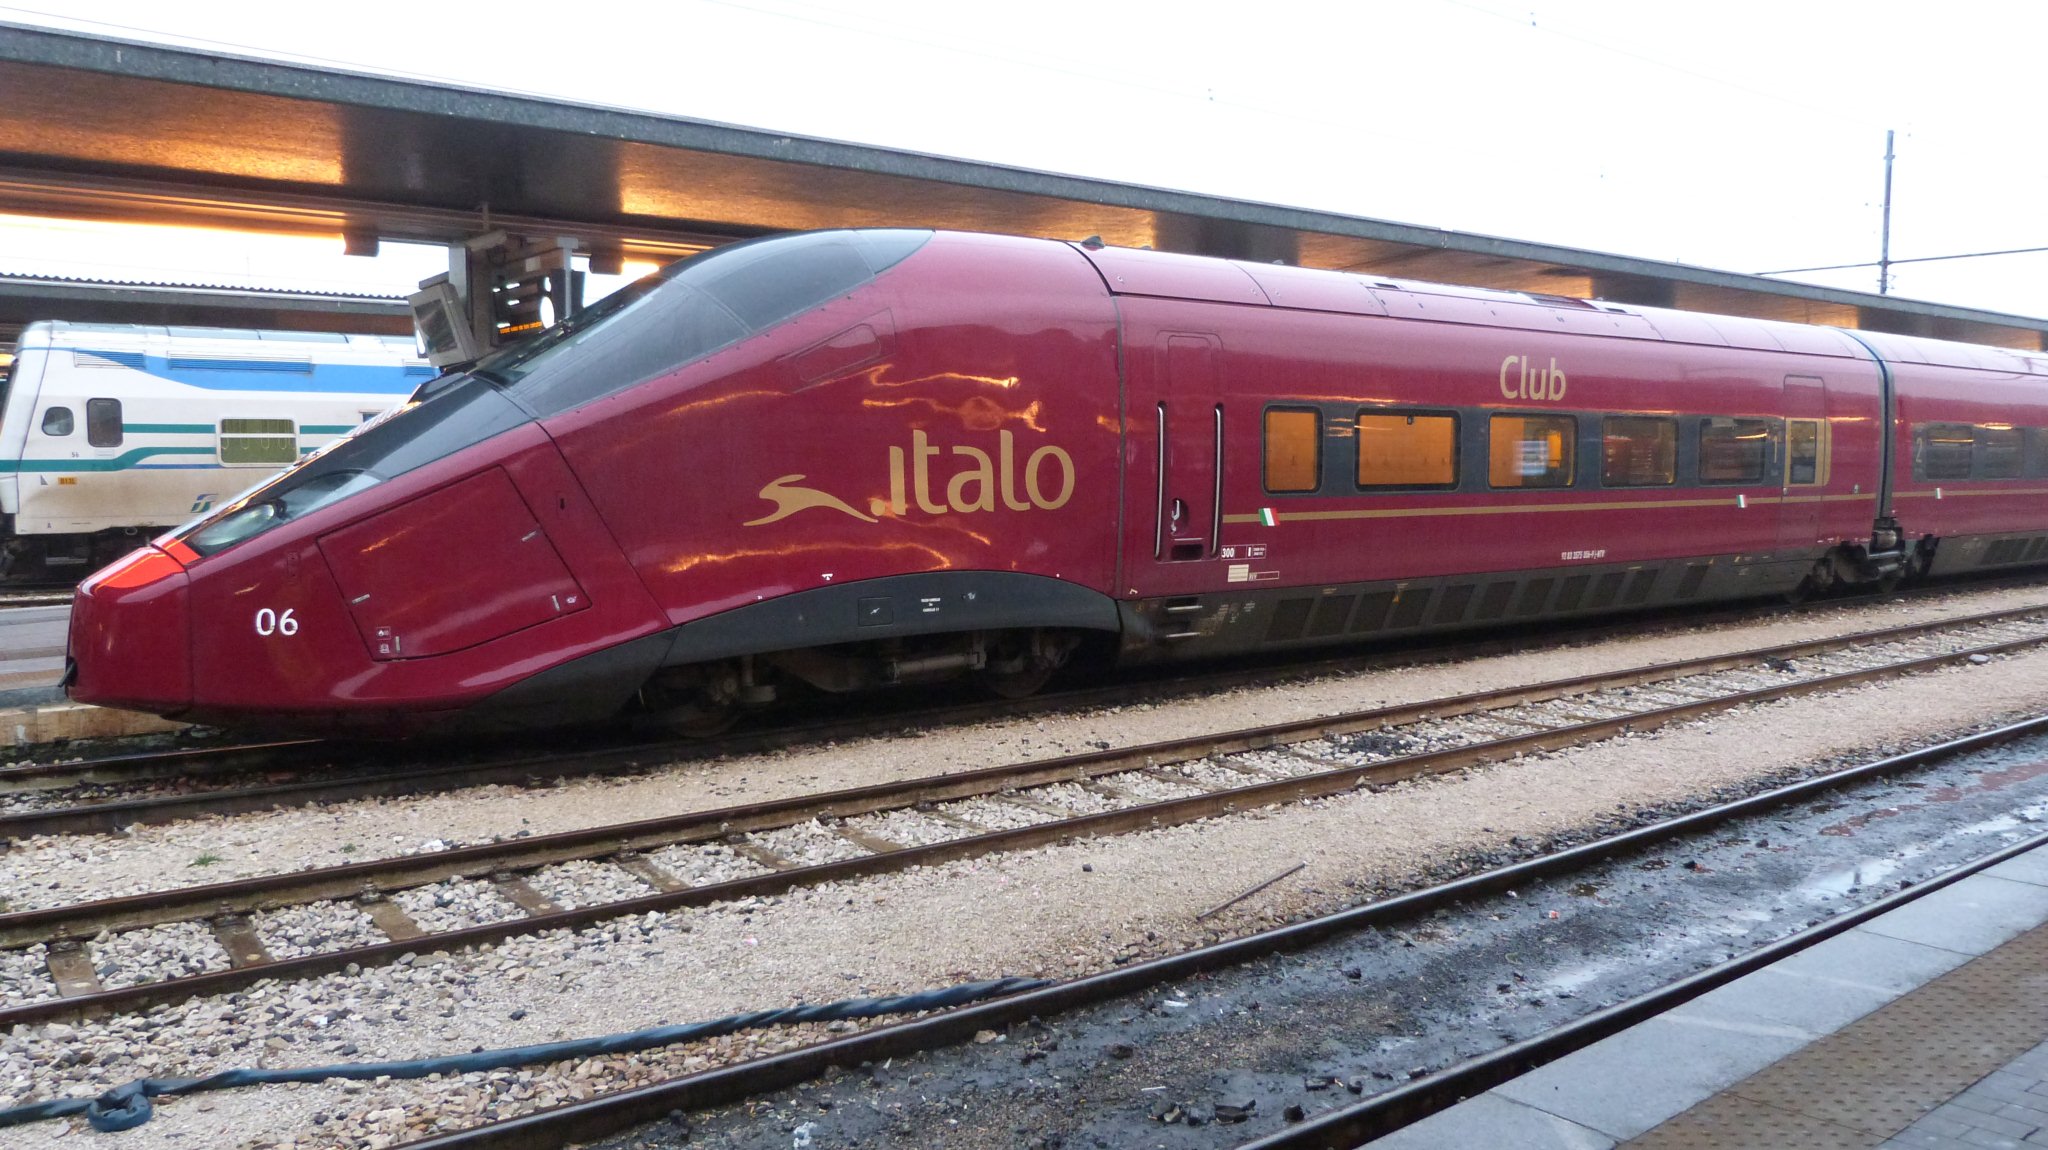 Italotreno. Поезд AGV Alstom. AGV поезд скоростной. Высокоскоростной поезд AGV 575 Italo.